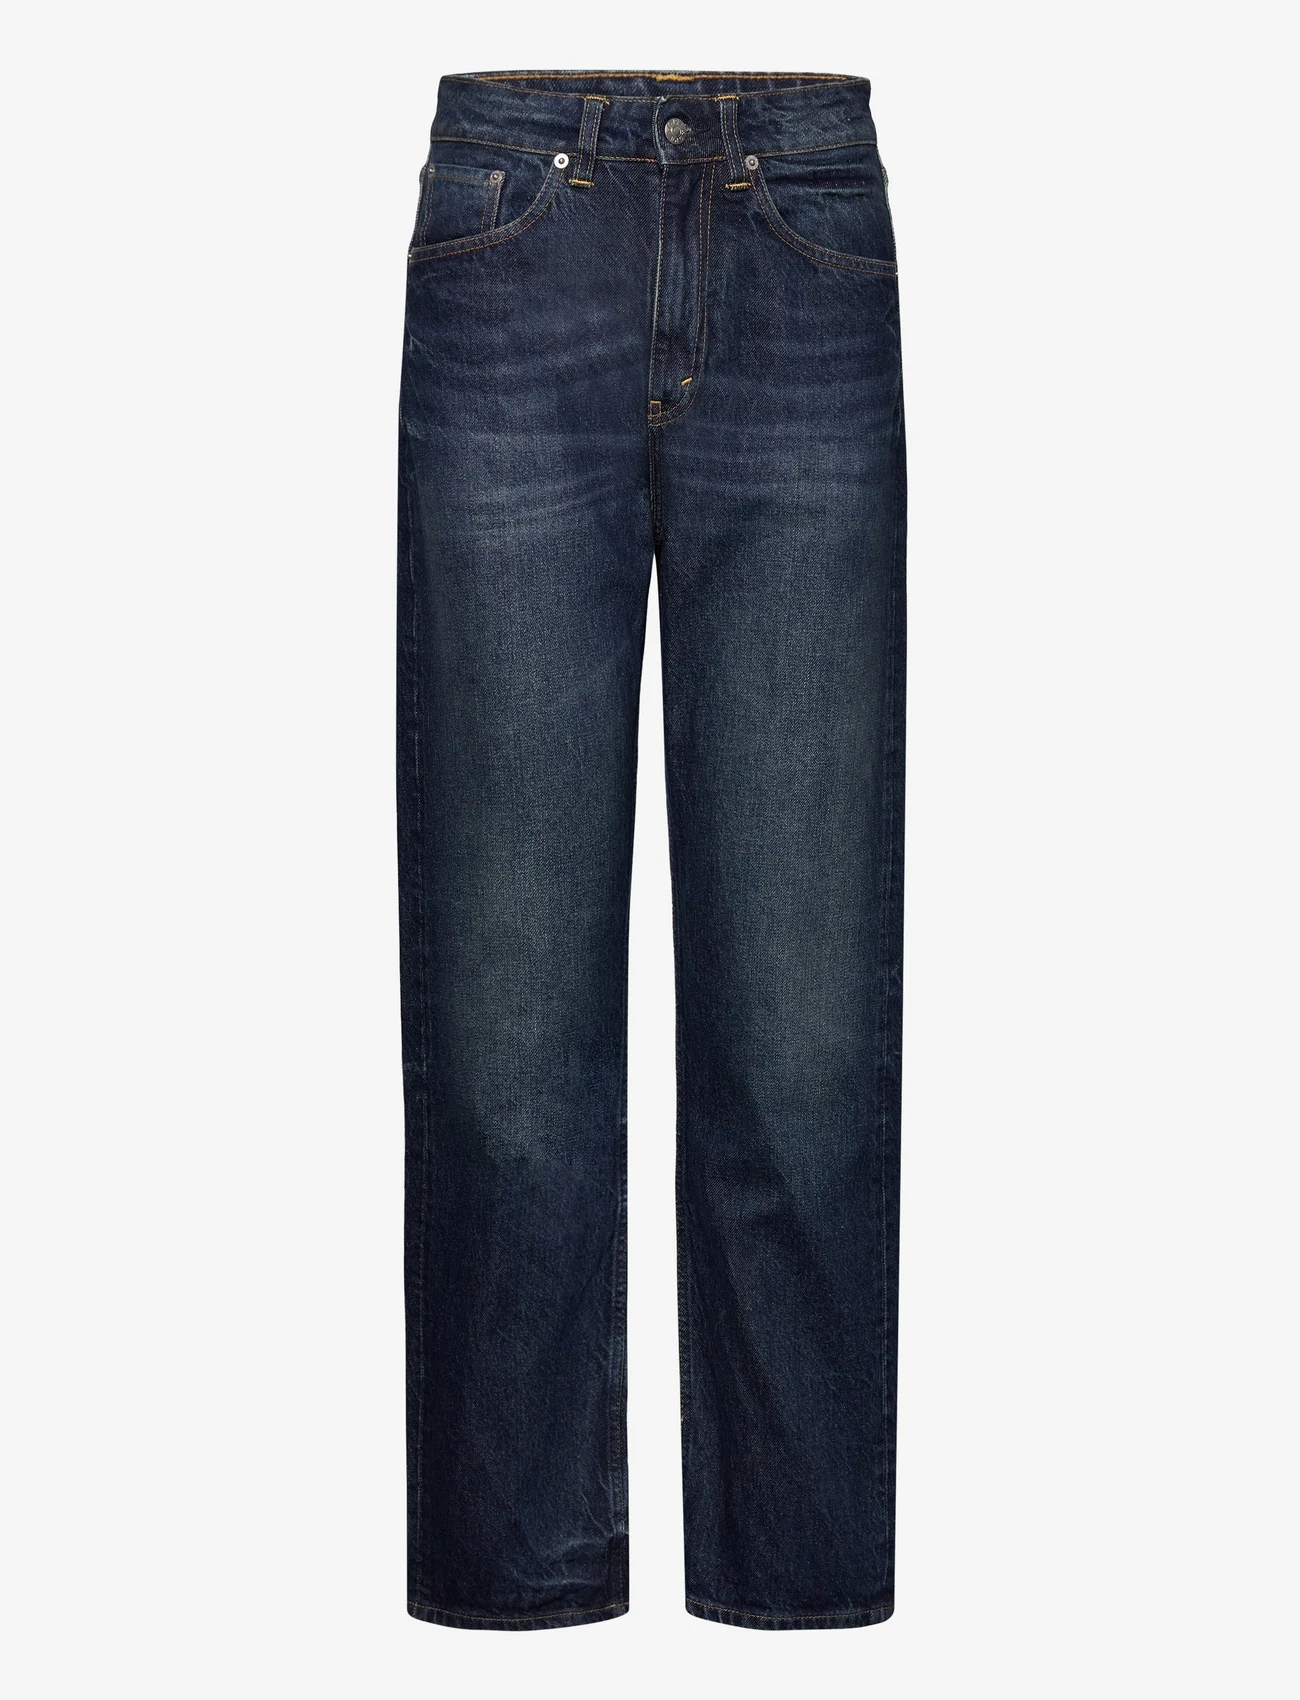 Hope - Slim High-Rise Jeans - wide leg jeans - dark blue vintage - 0